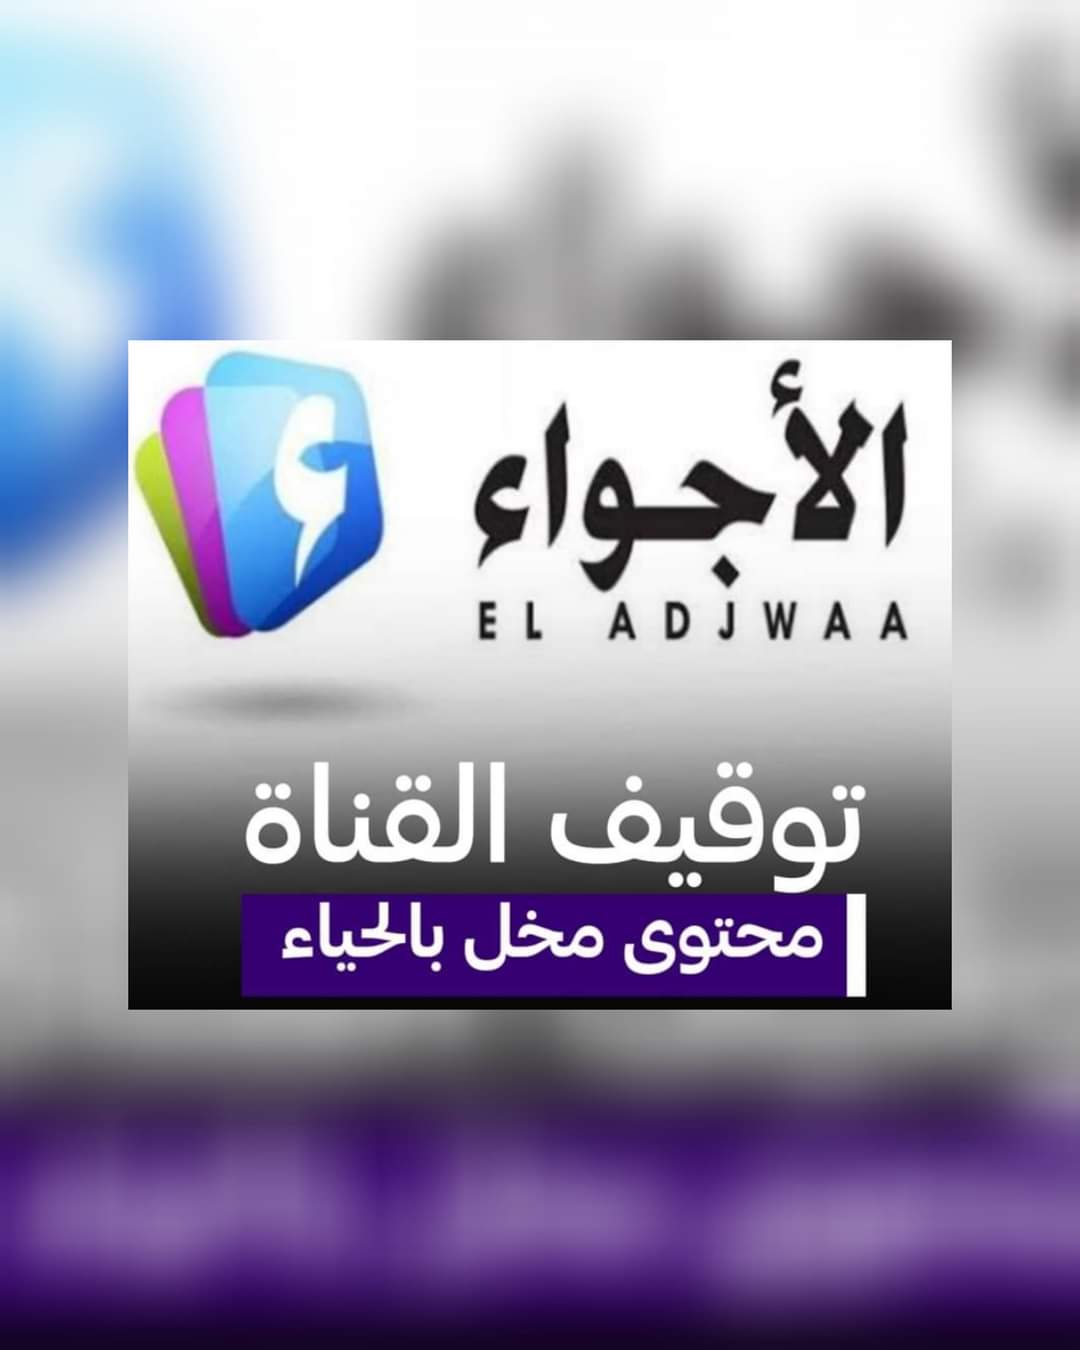 El Adjwaa djalia-dz 